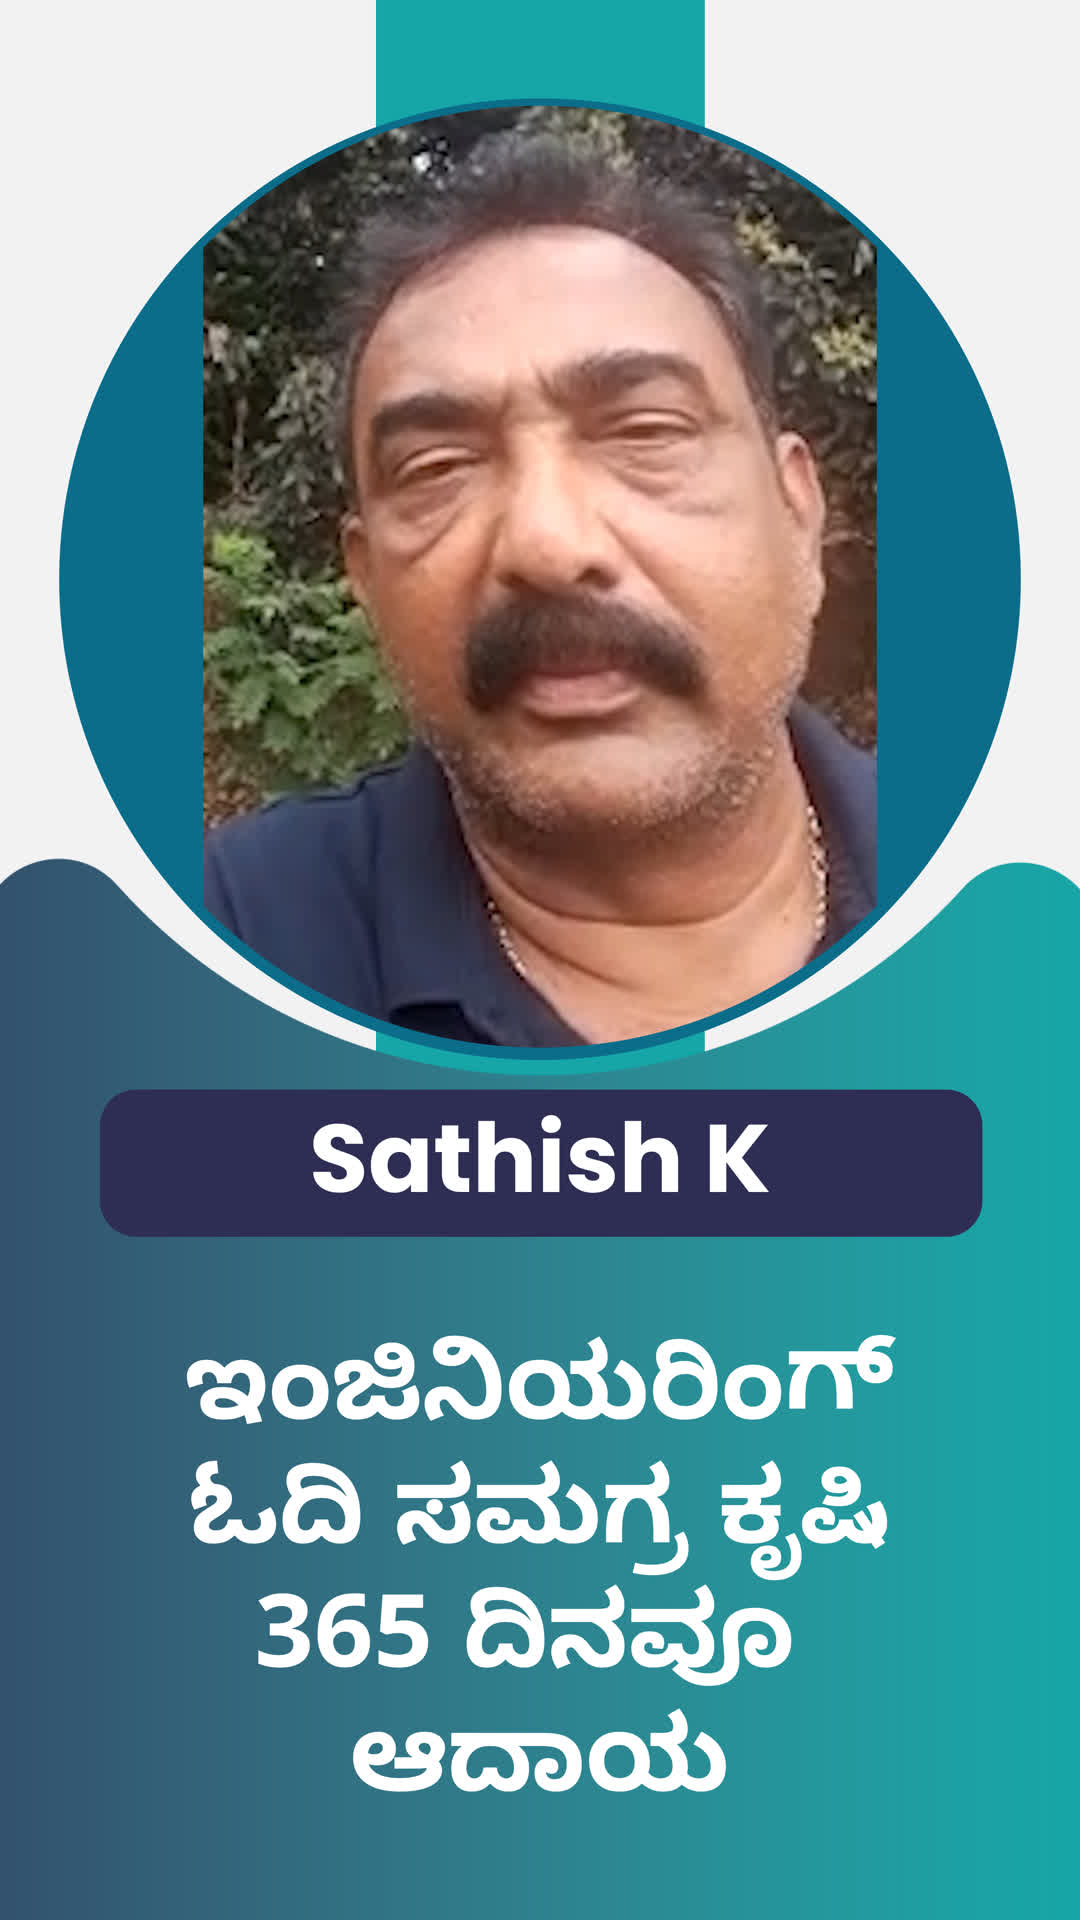 Sateesha k's Honest Review of ffreedom app - Chamarajnagar ,Karnataka